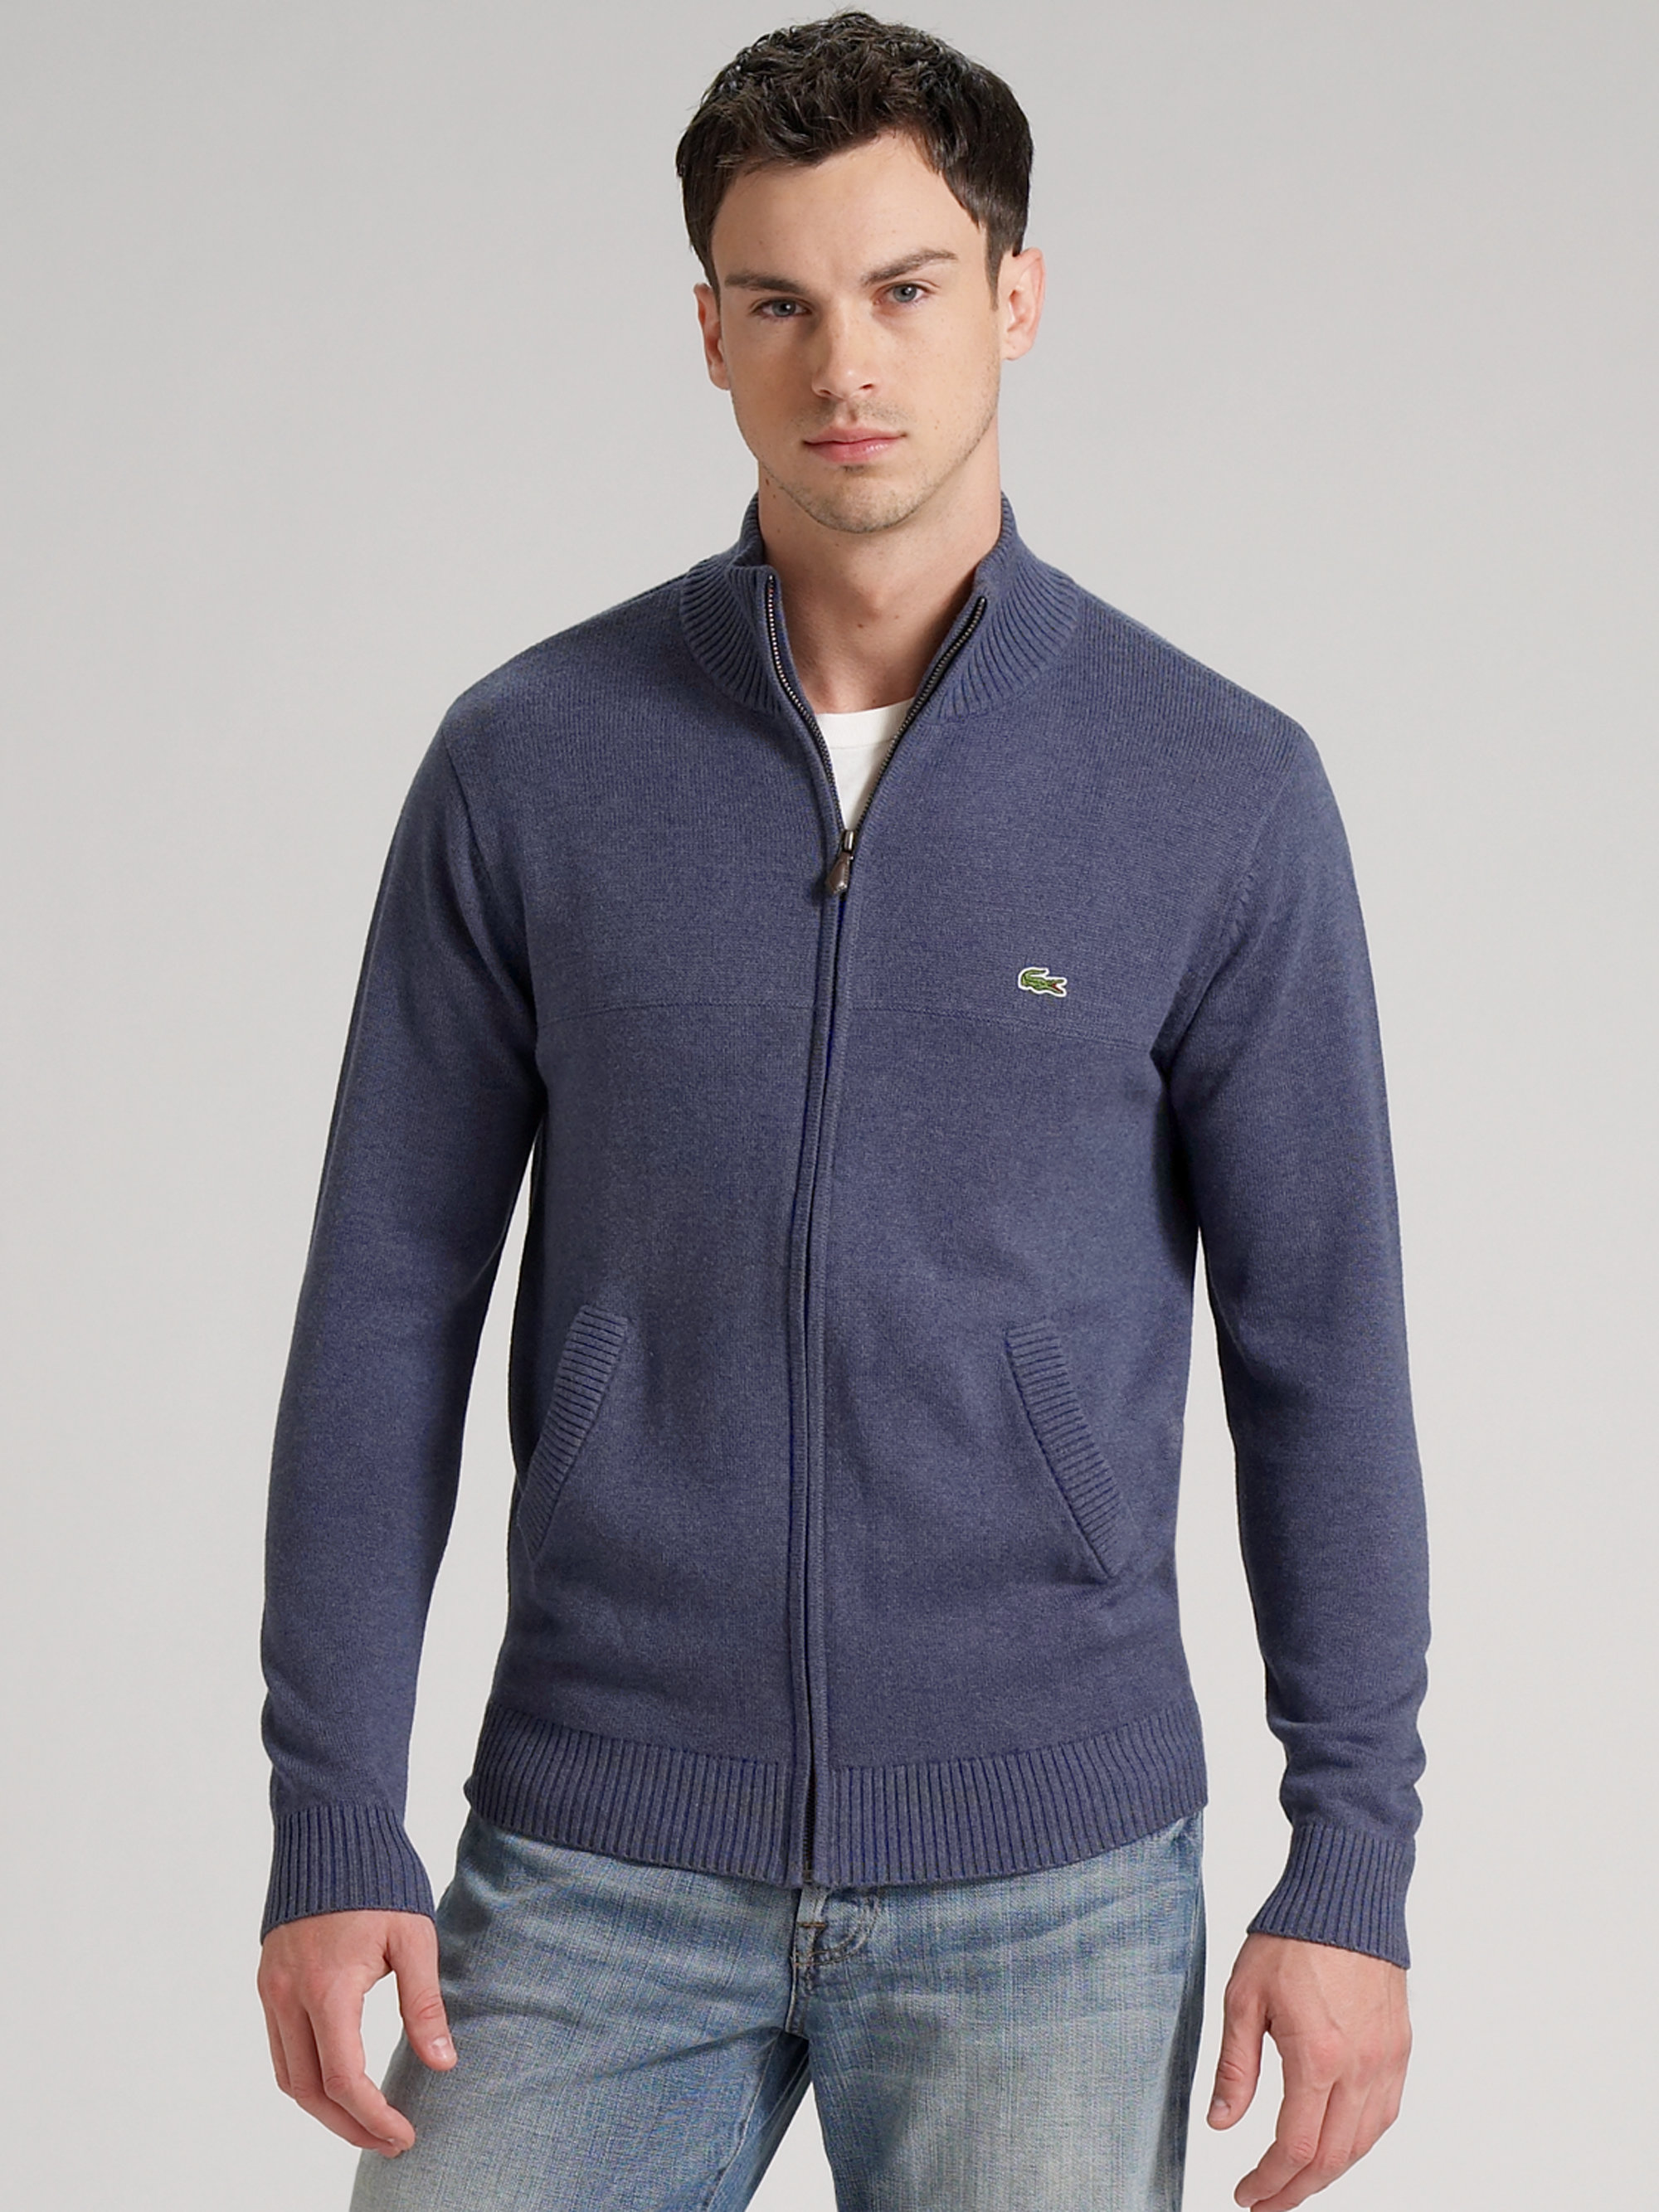 Lyst - Lacoste Zipfront Cardigan Sweater in Blue for Men